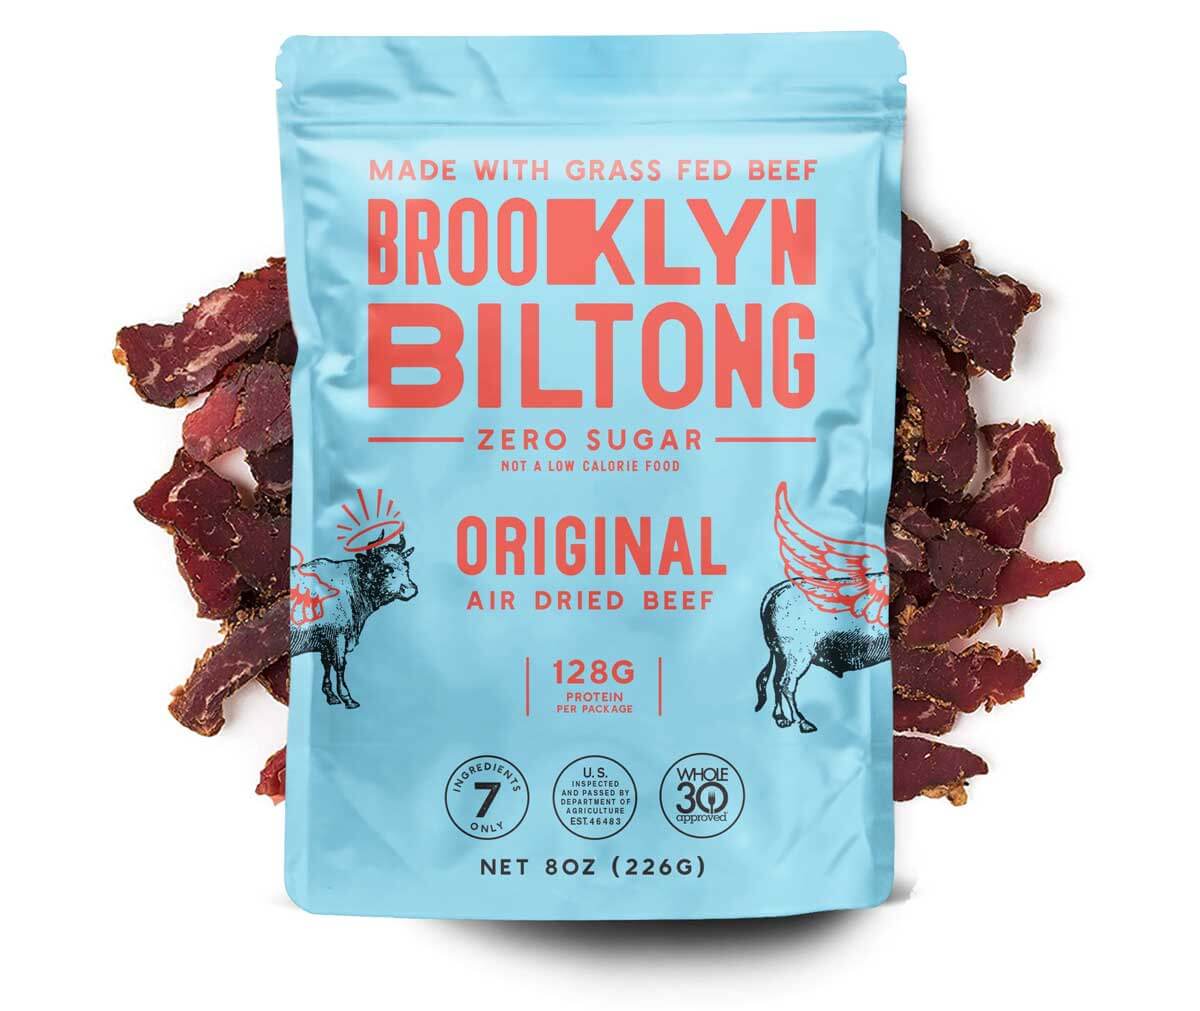 Whole30 Brooklyn Biltong air-dried beef.